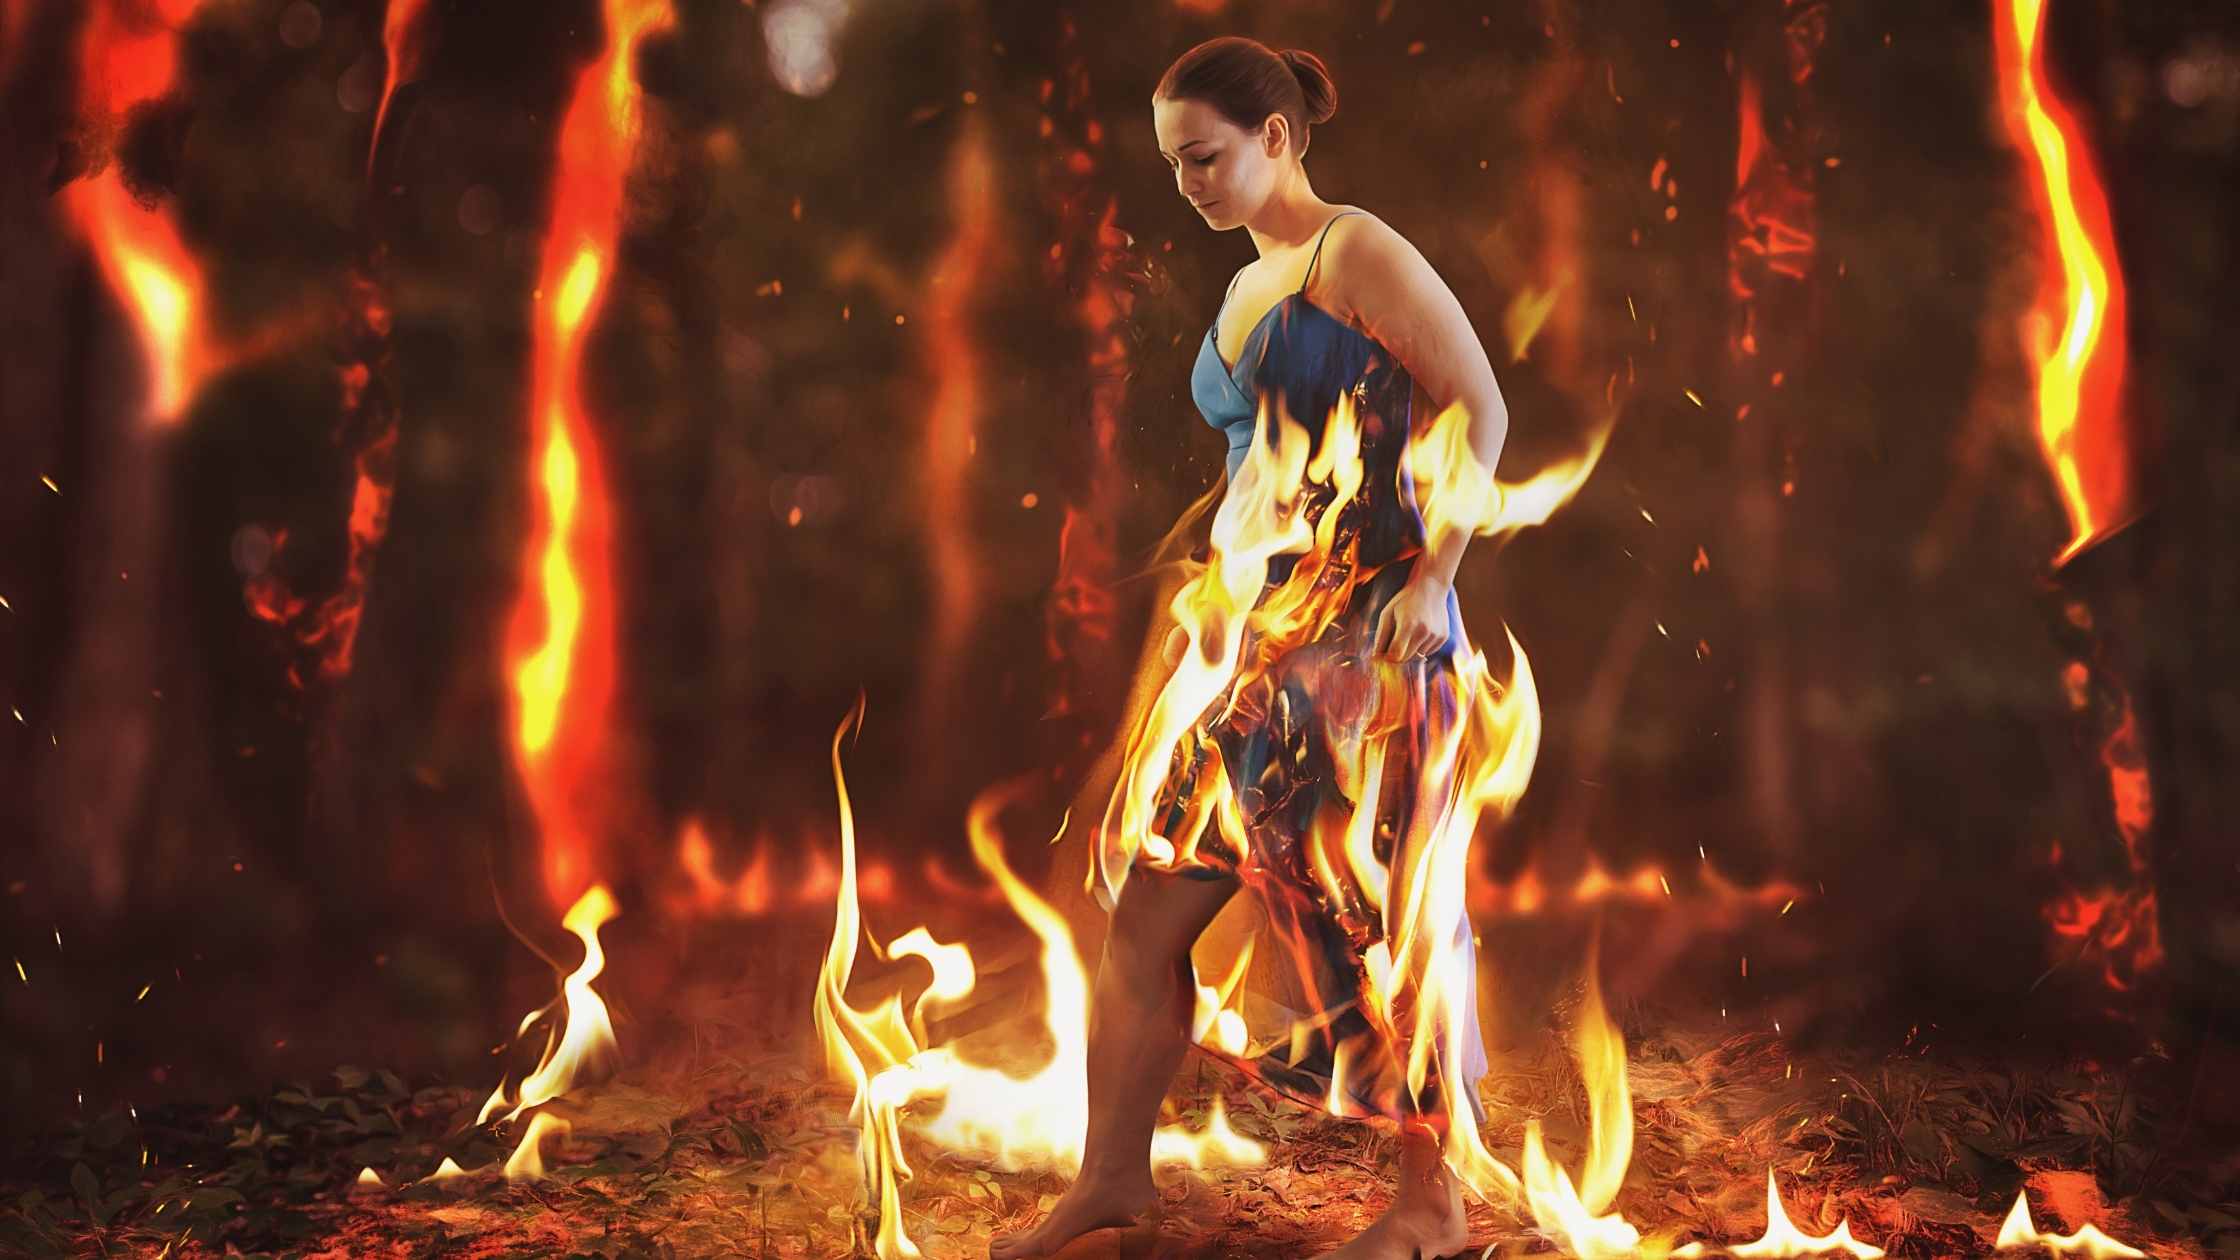 Woman walks through a burning forest fire